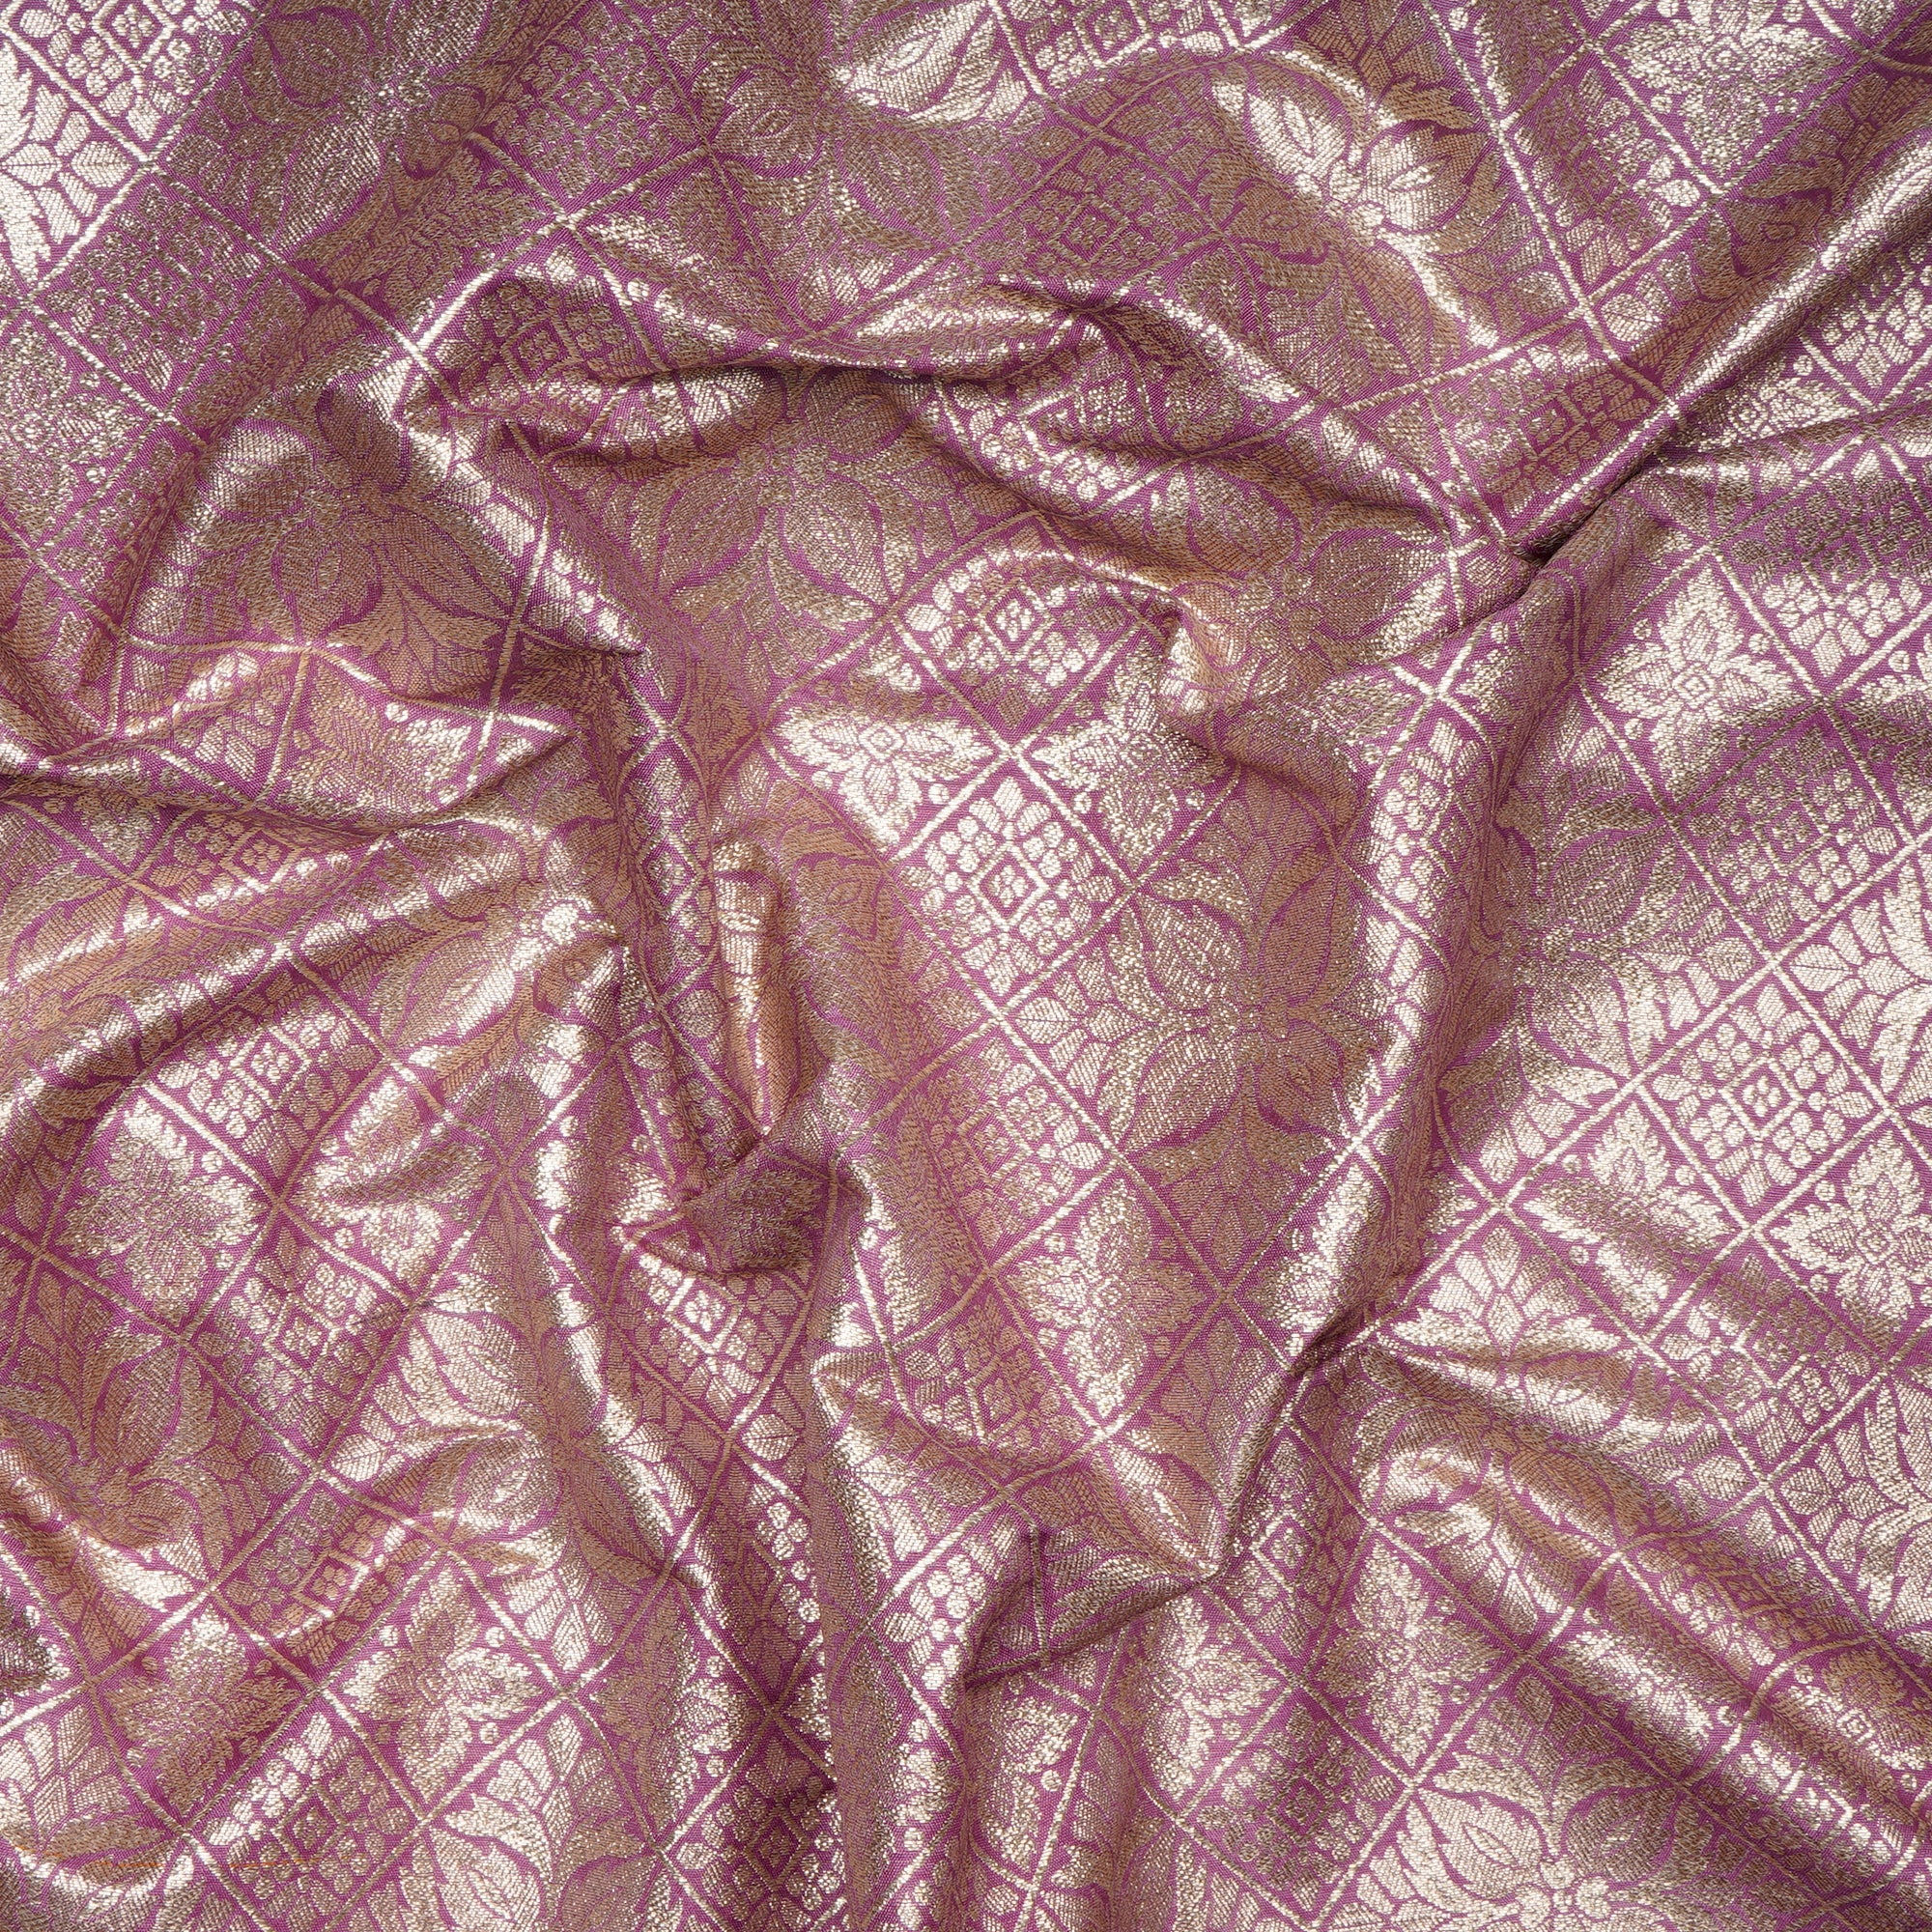 Bodacious All Over Blended Banarasi Brocade Fabric